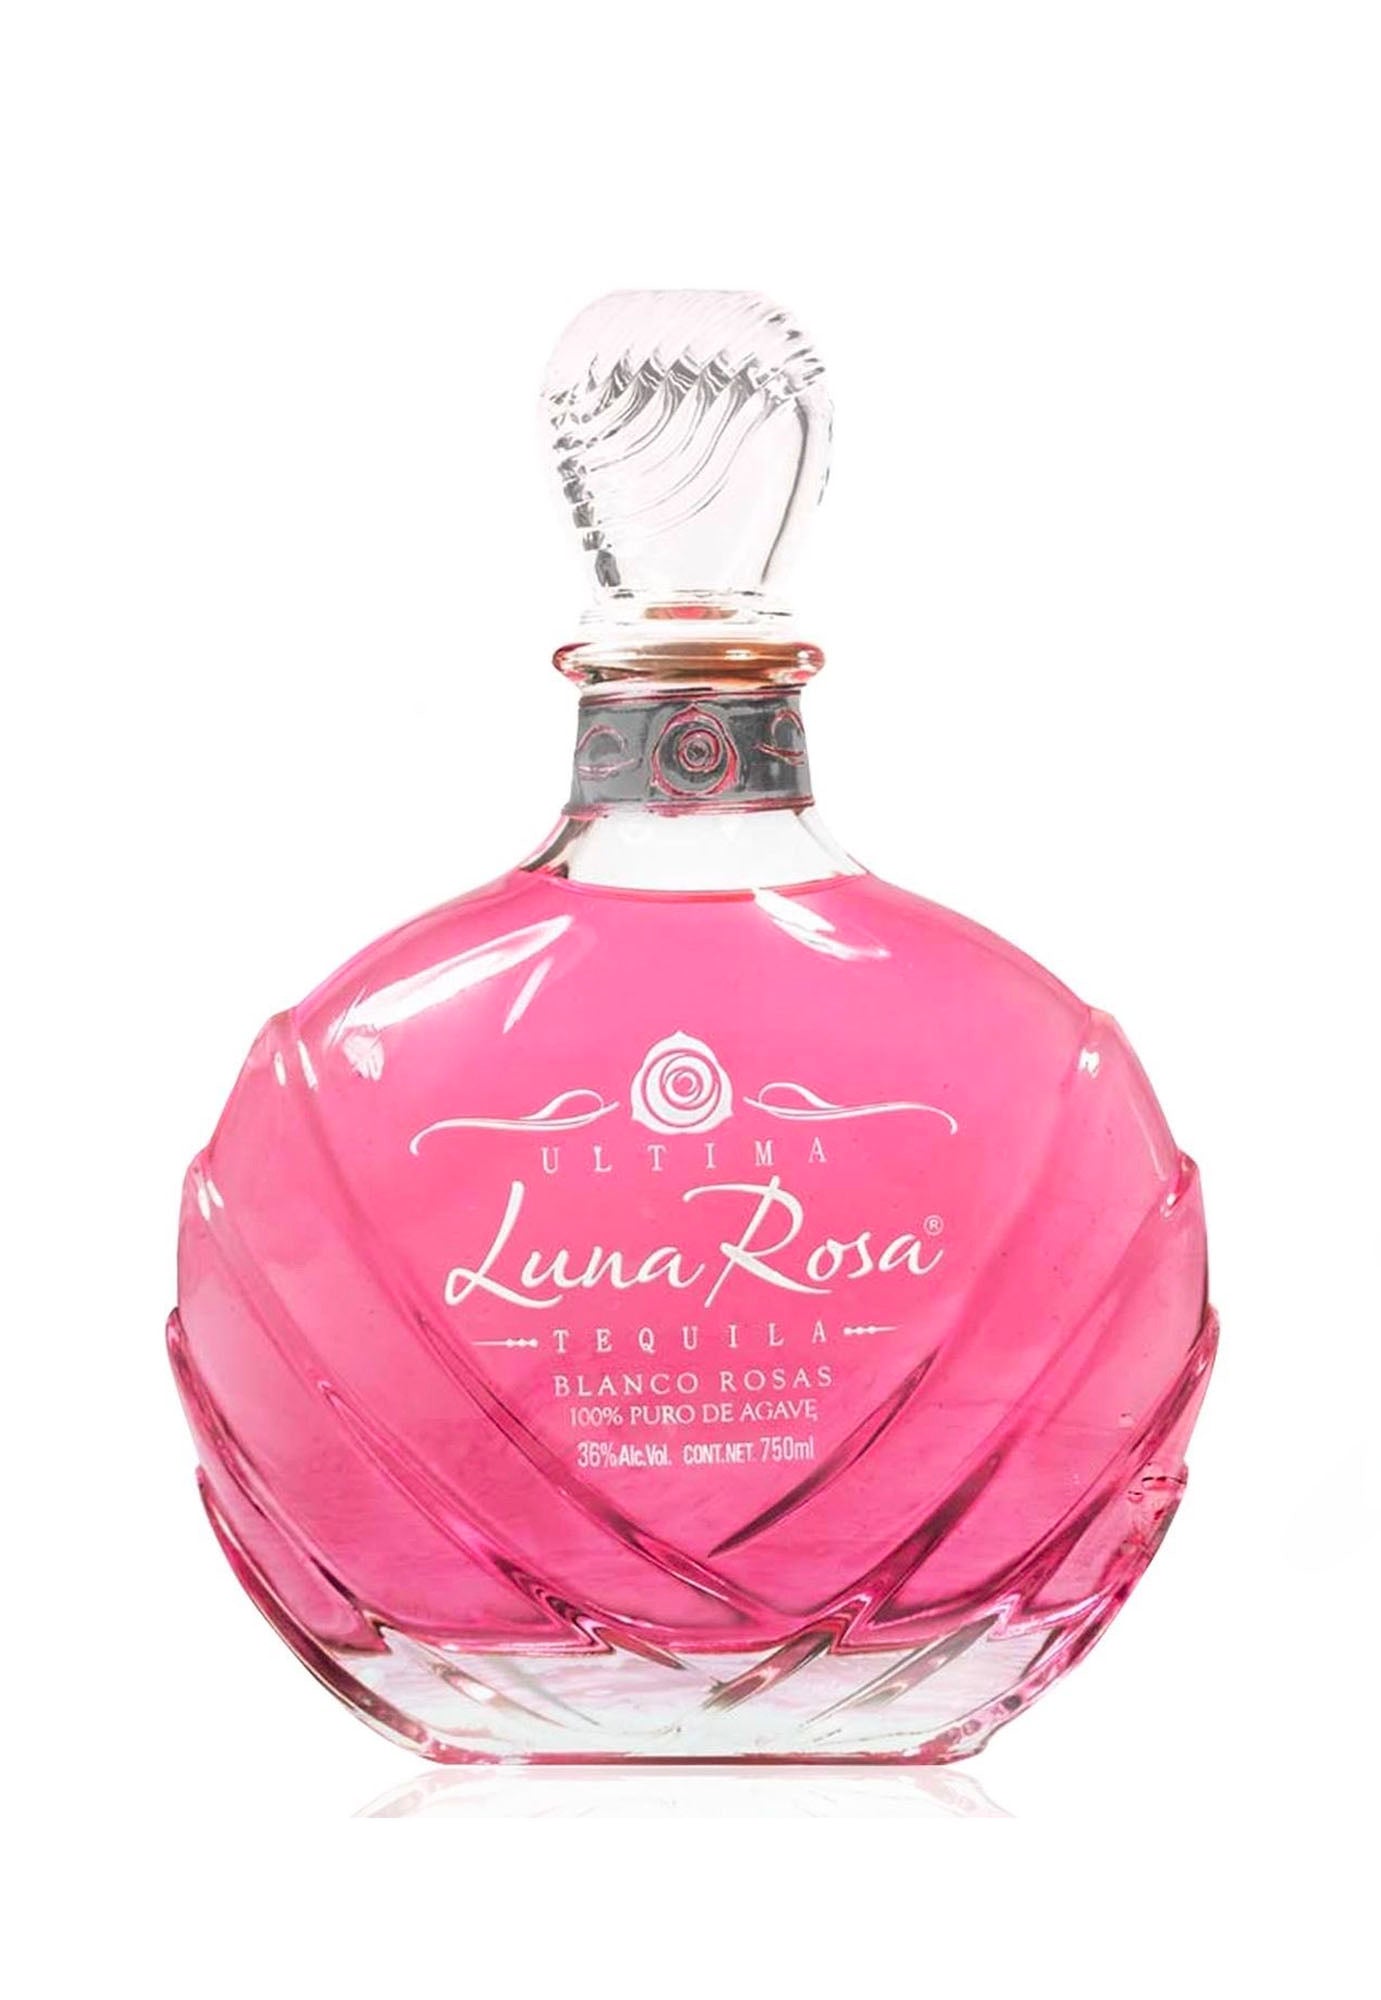 Ultima Luna Rosa Blanco Rosas Tequila